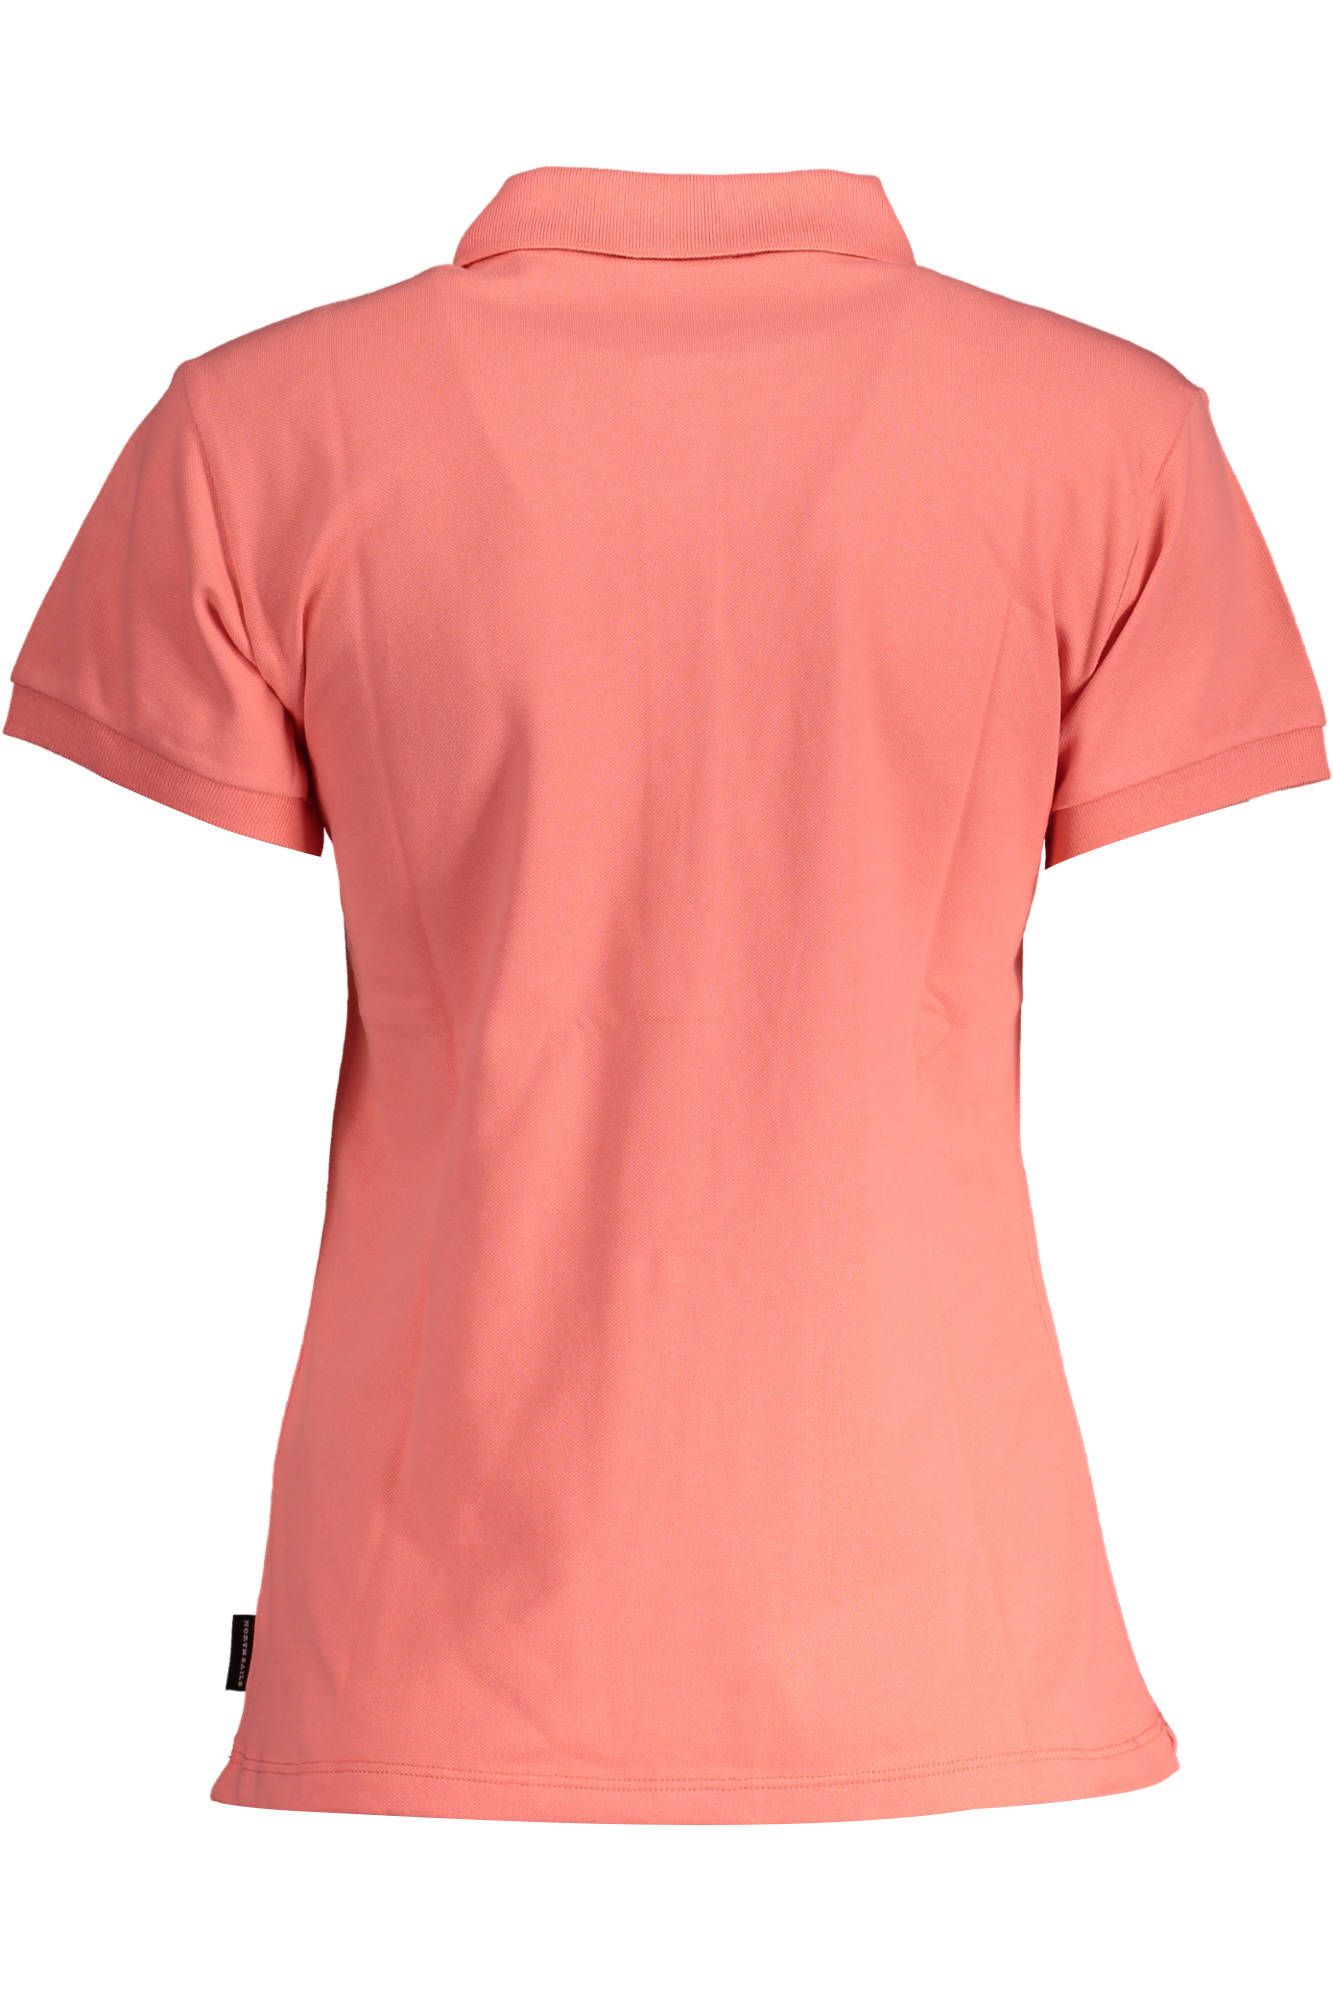 North Sails Pink Cotton Polo Shirt